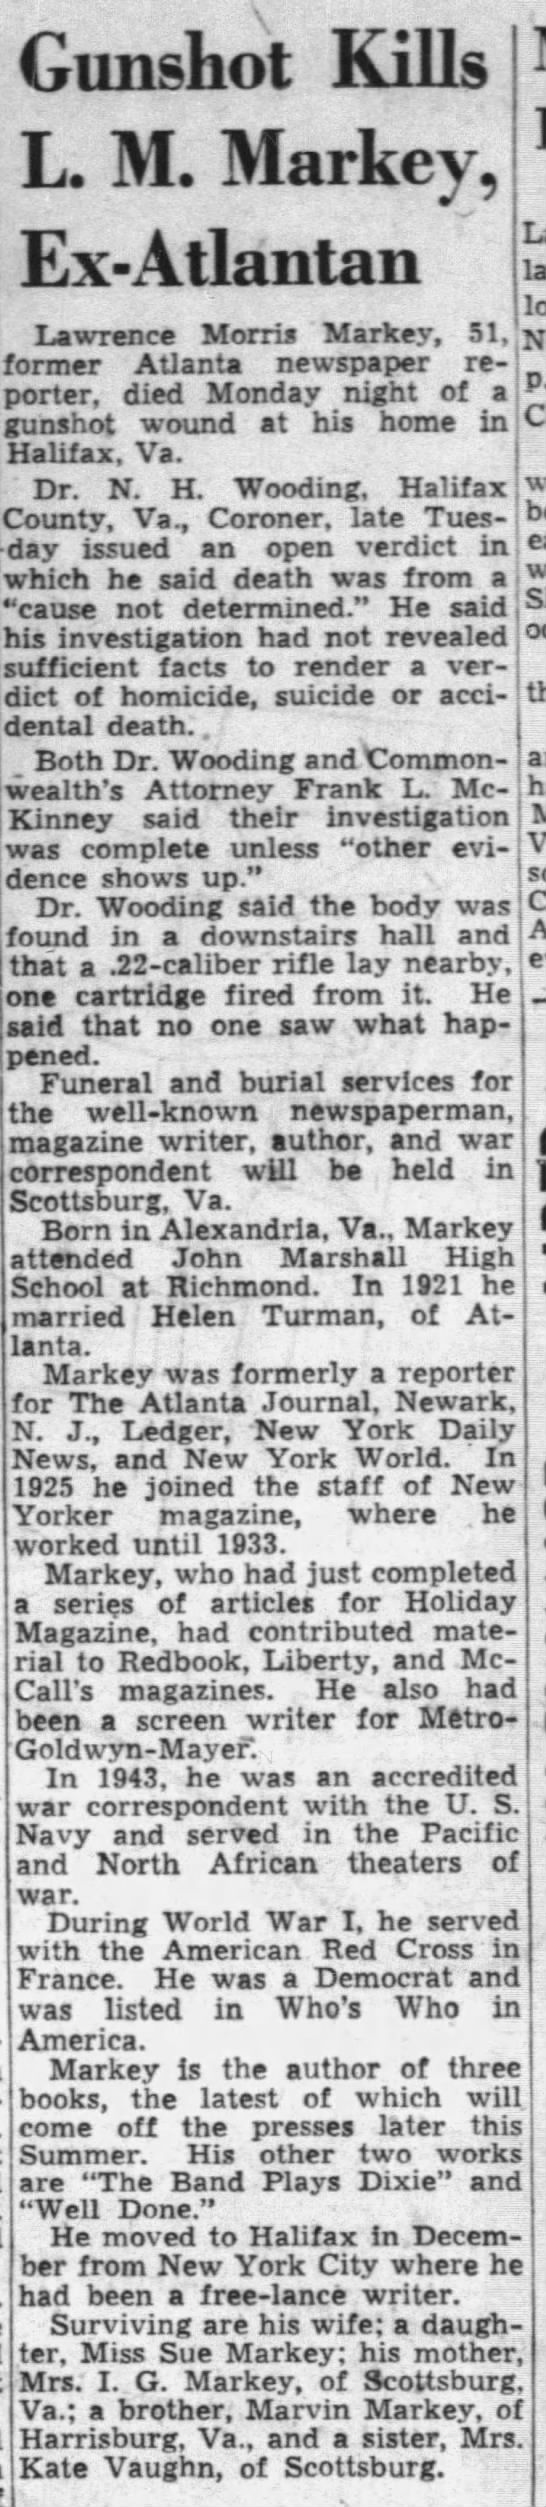 1950 Jul. Gunshot Kills Lawrence Morris Markey, 51, Ex-Atlantan. - 